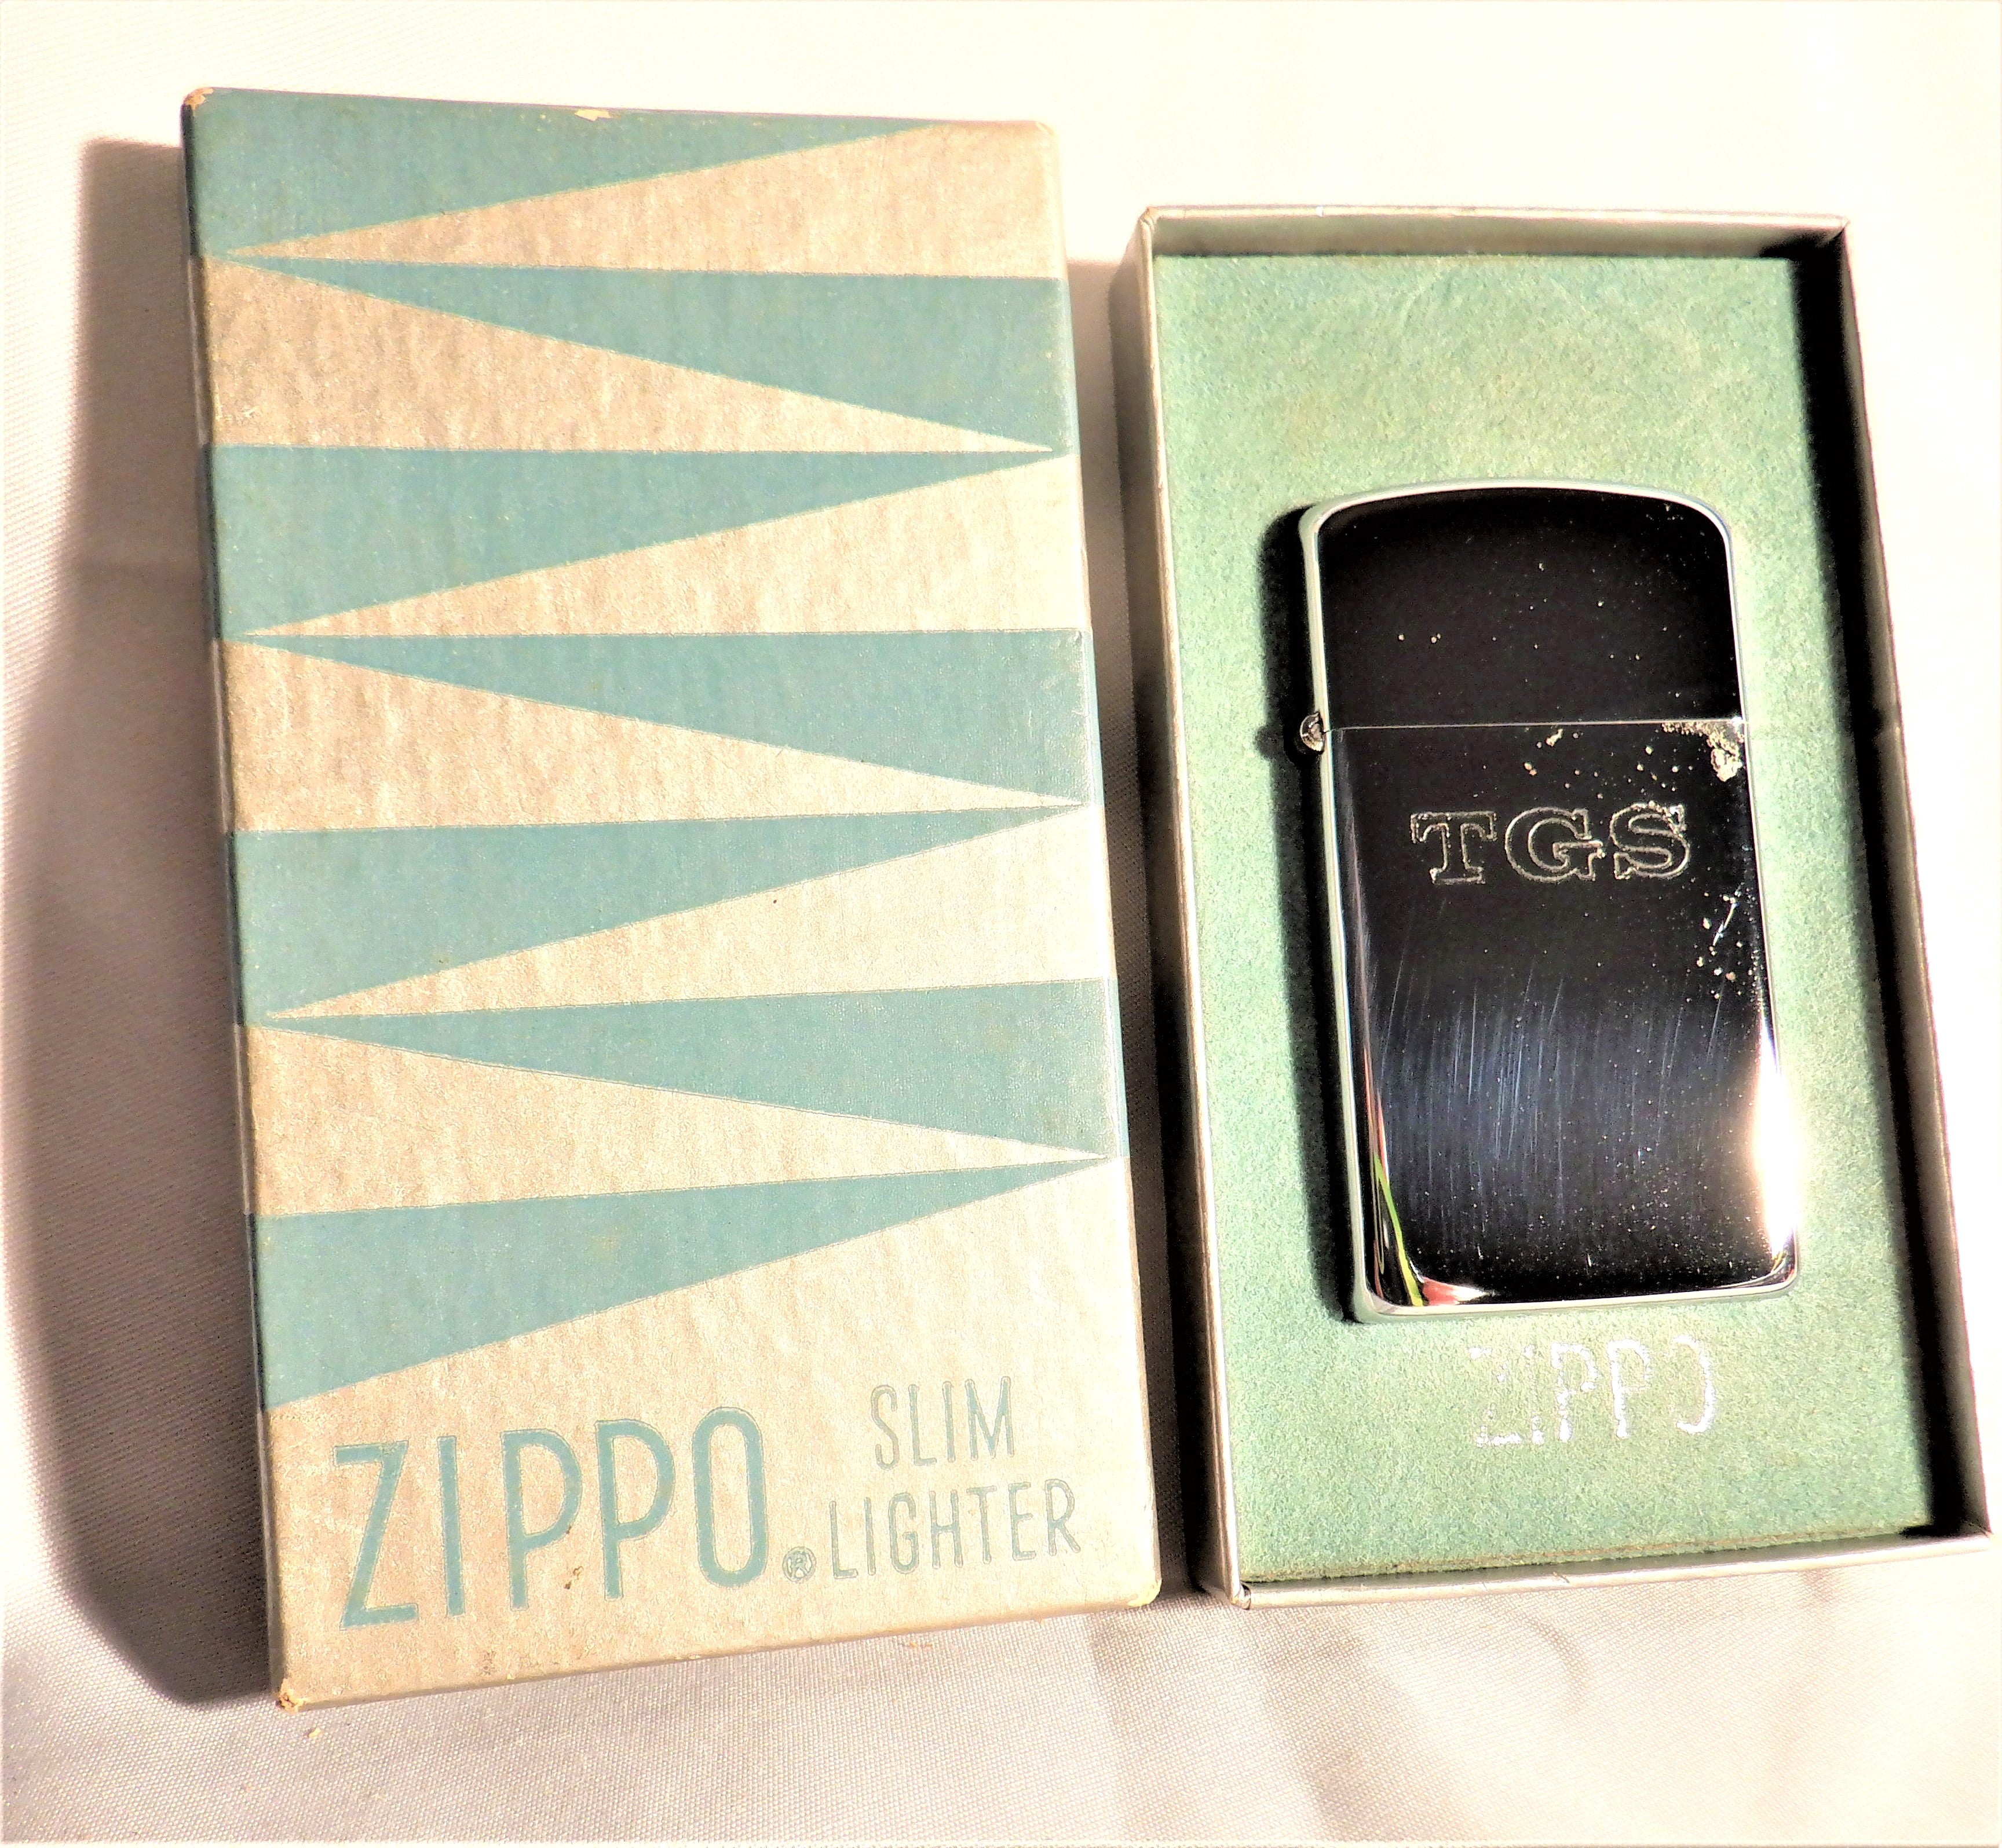 ZIPPO SLIM II LIGHTER, Chrome High Shine, Vintage-New in Original Box!